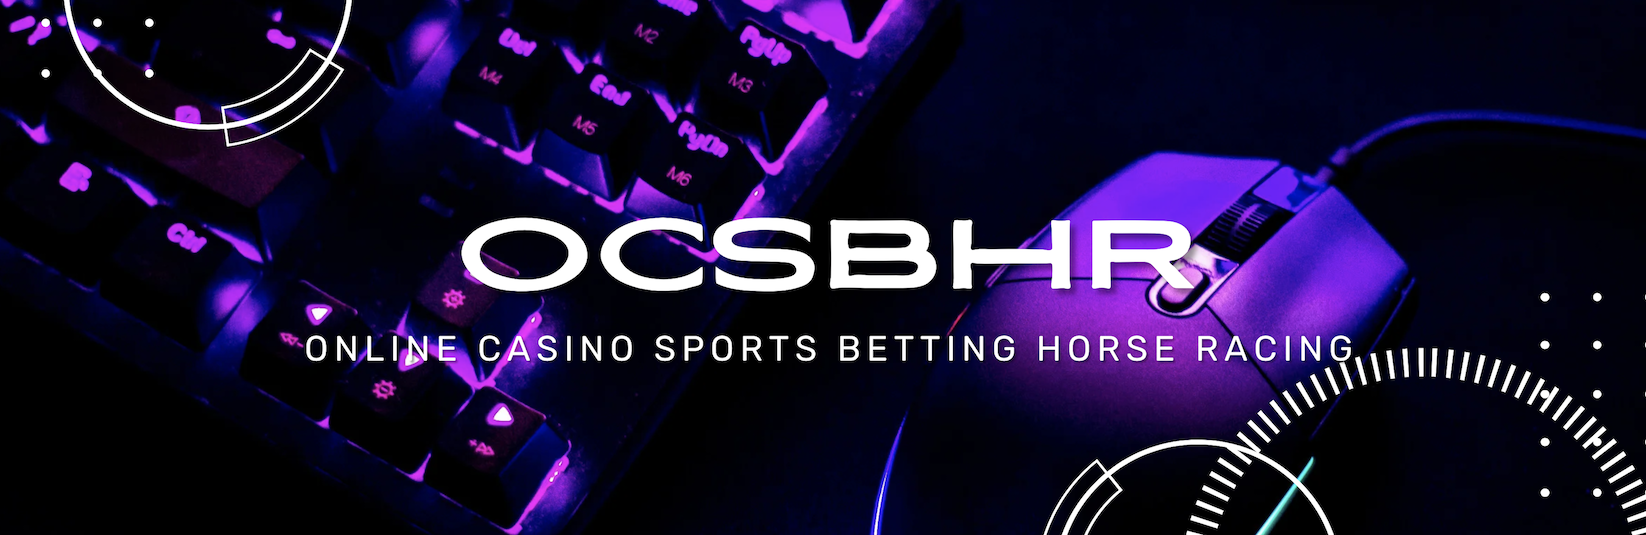 Sports Betting Online Casino Horse Racing